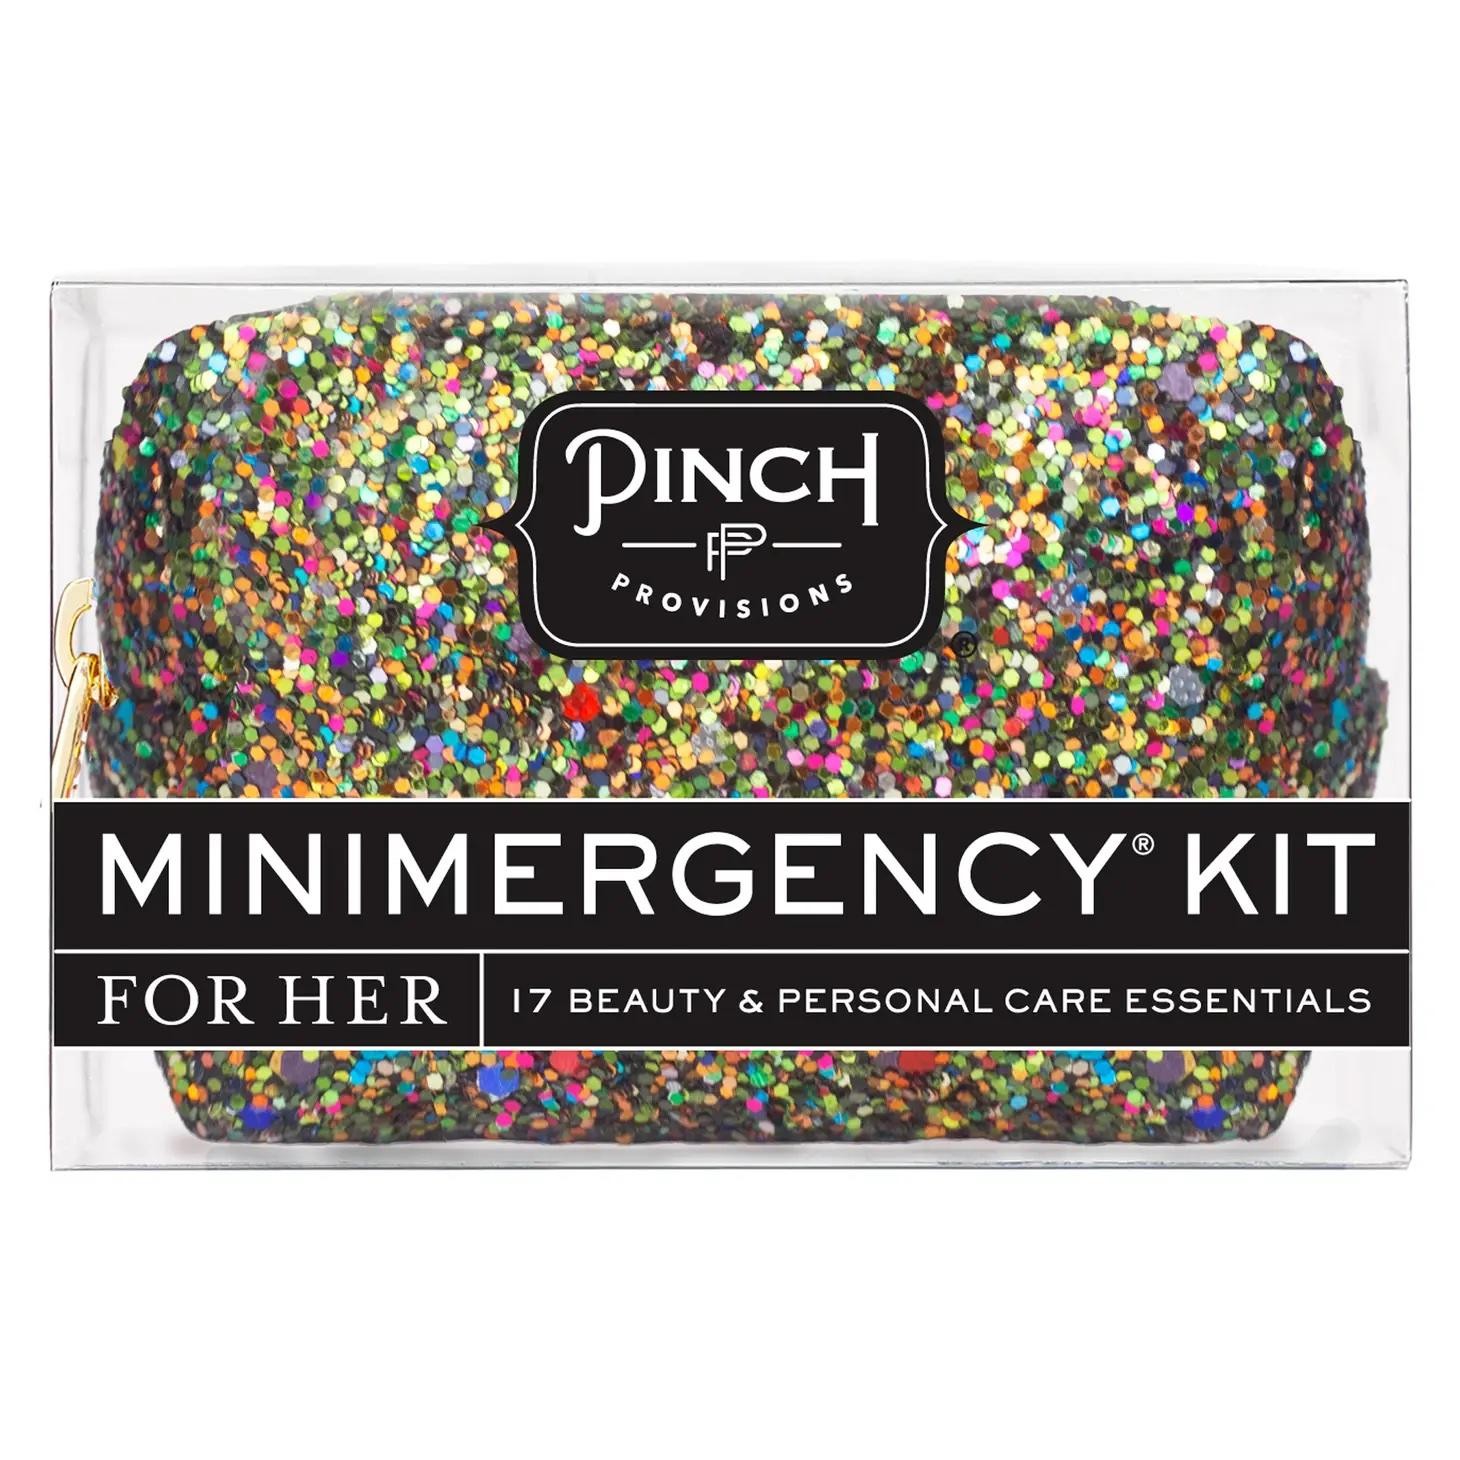 PIN Multi glitter minimergency kit